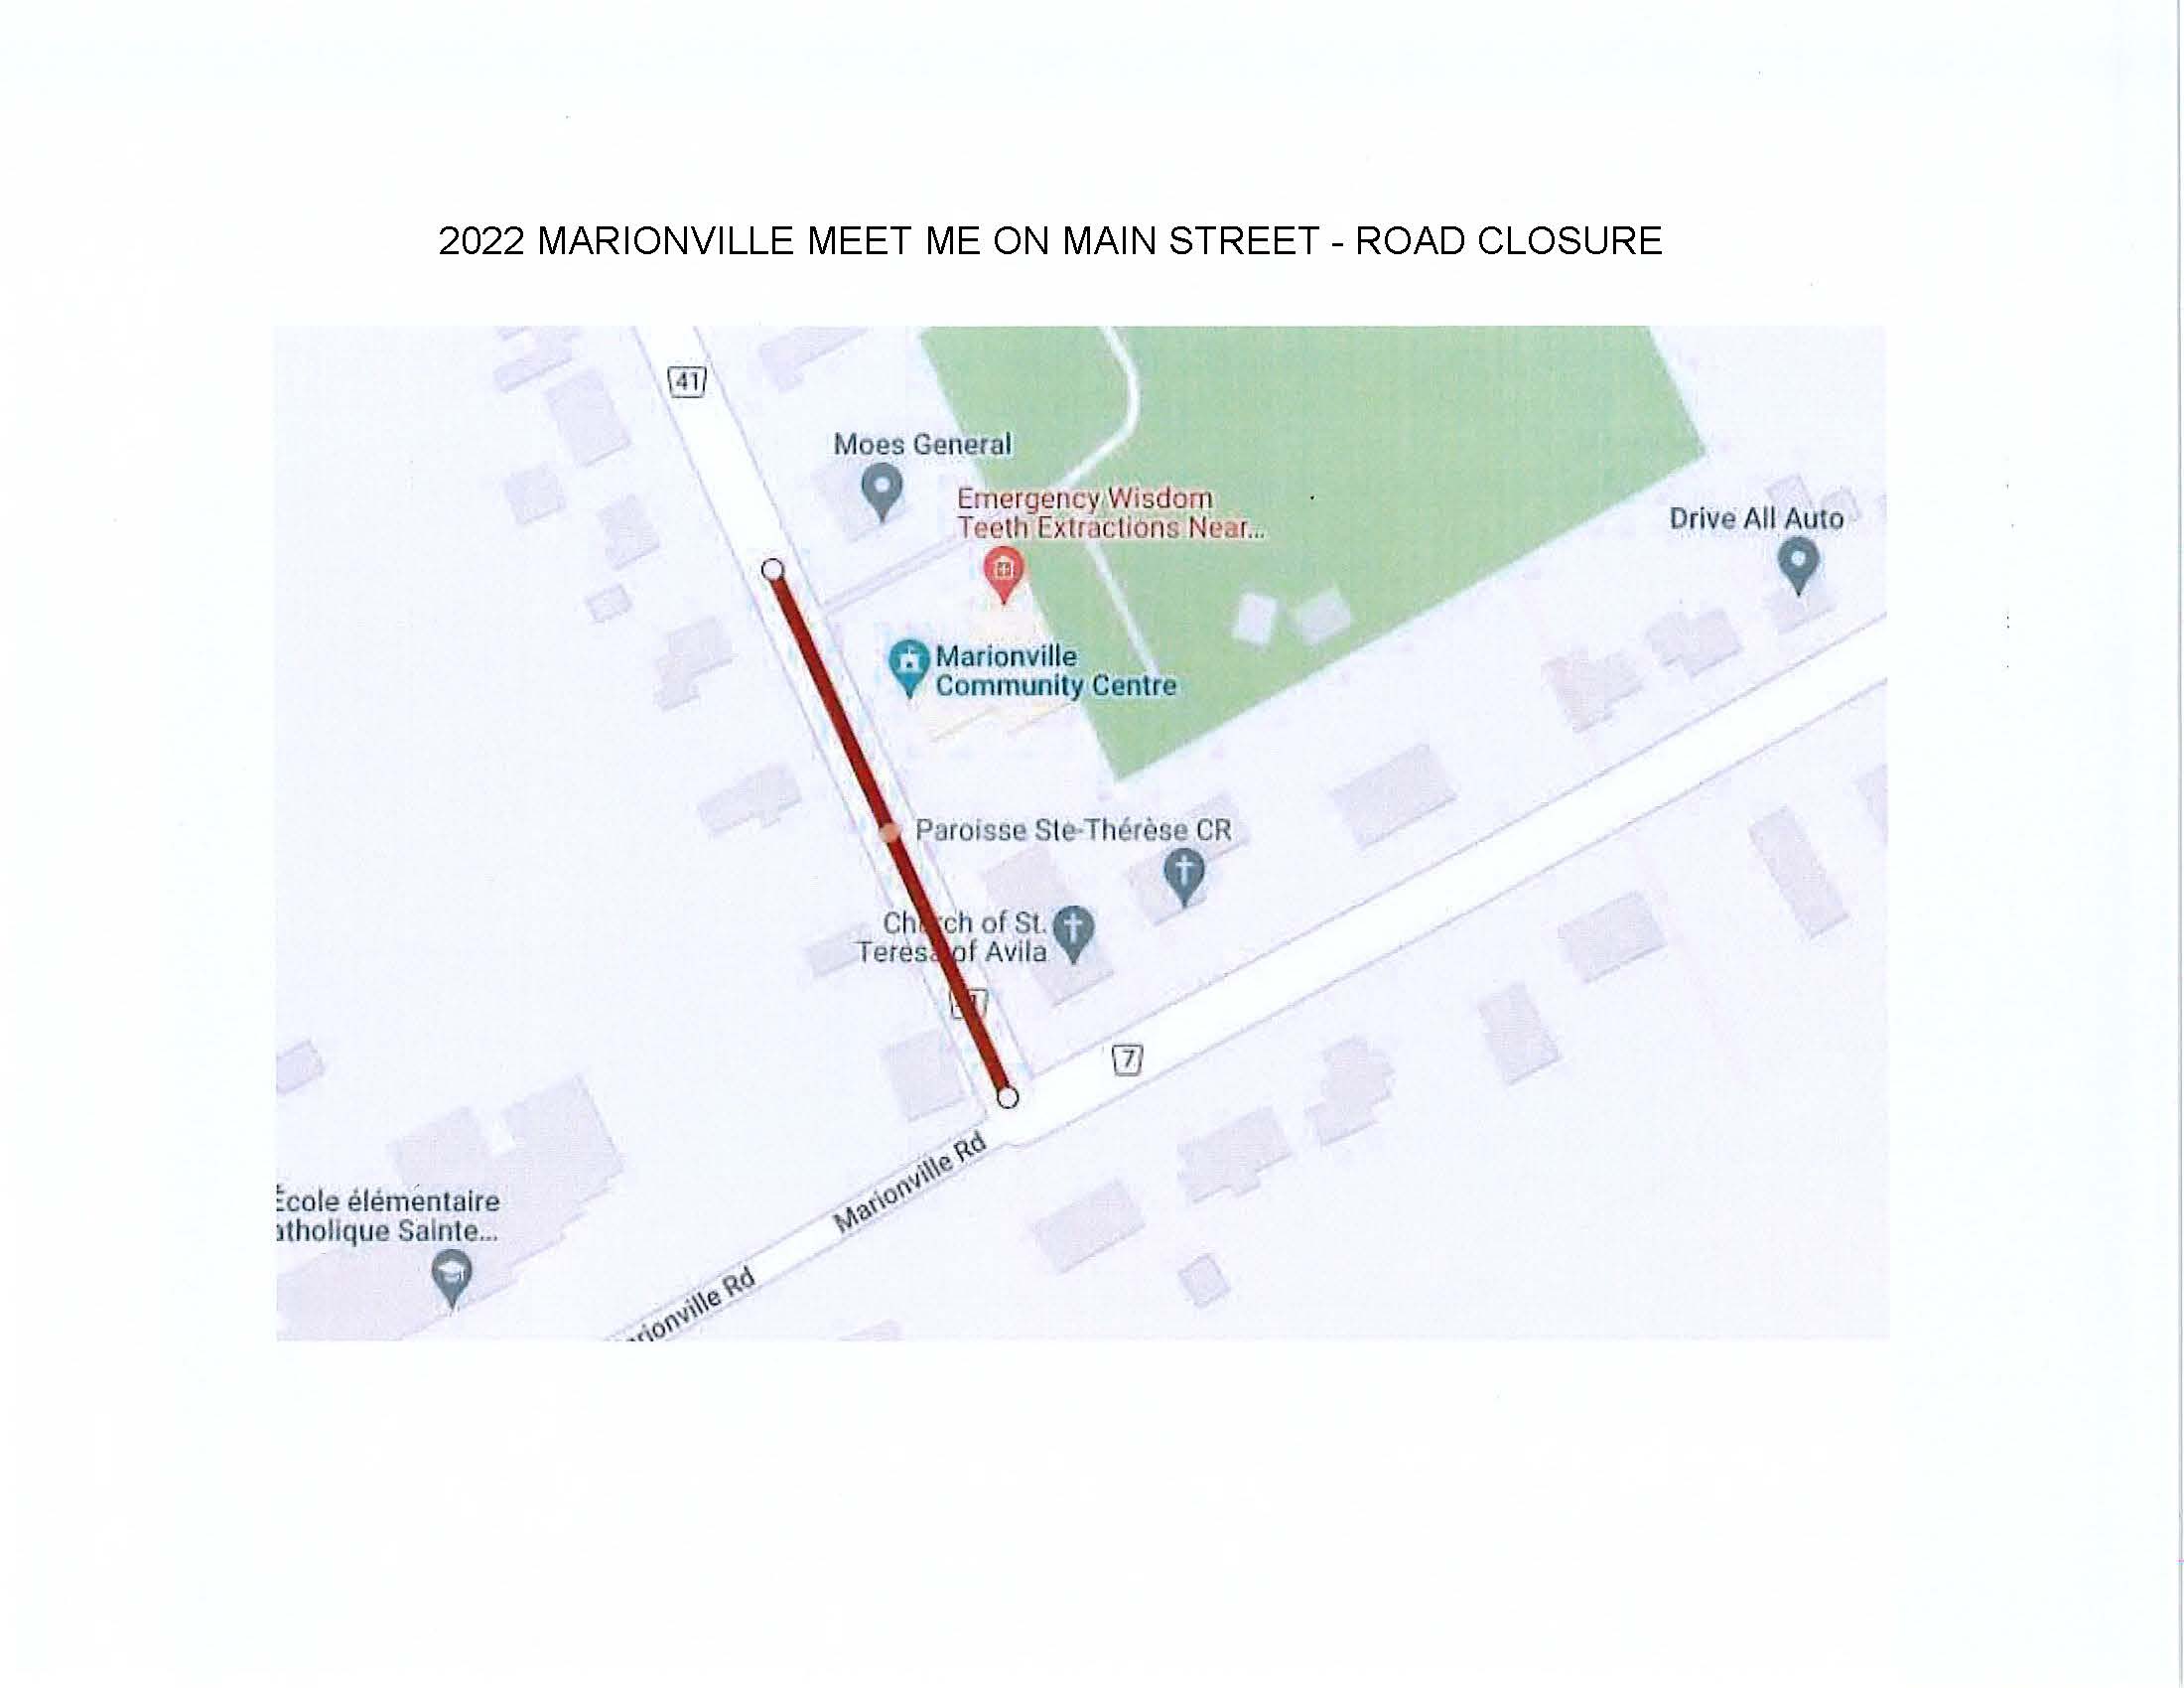 2022 Marionville MMOMS Road Closure Map